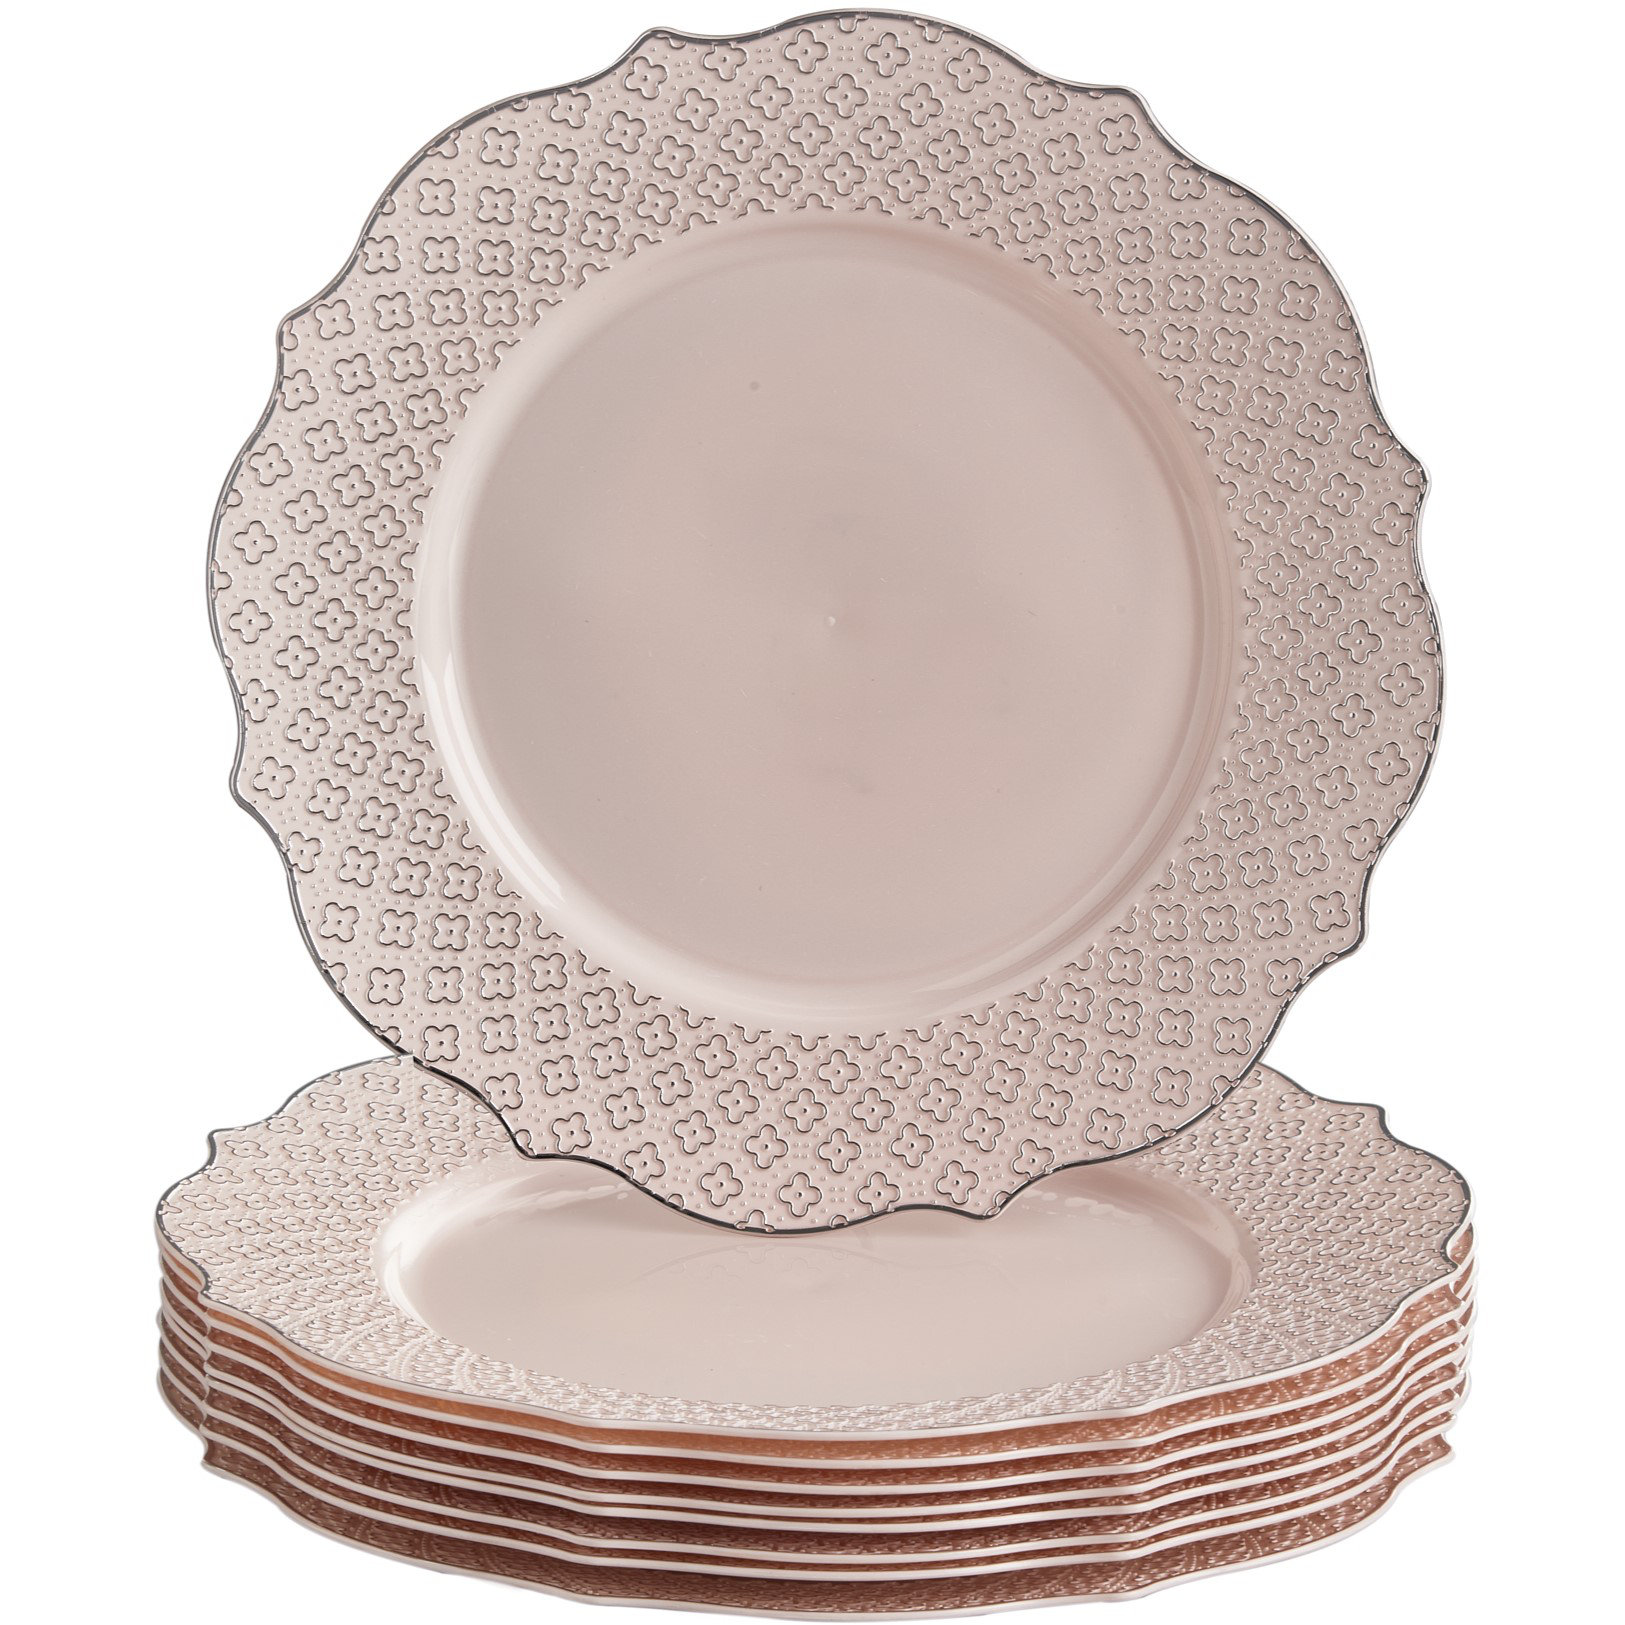 10 pcs 8 in Disposable Plastic Dessert Plates with Gold Rim